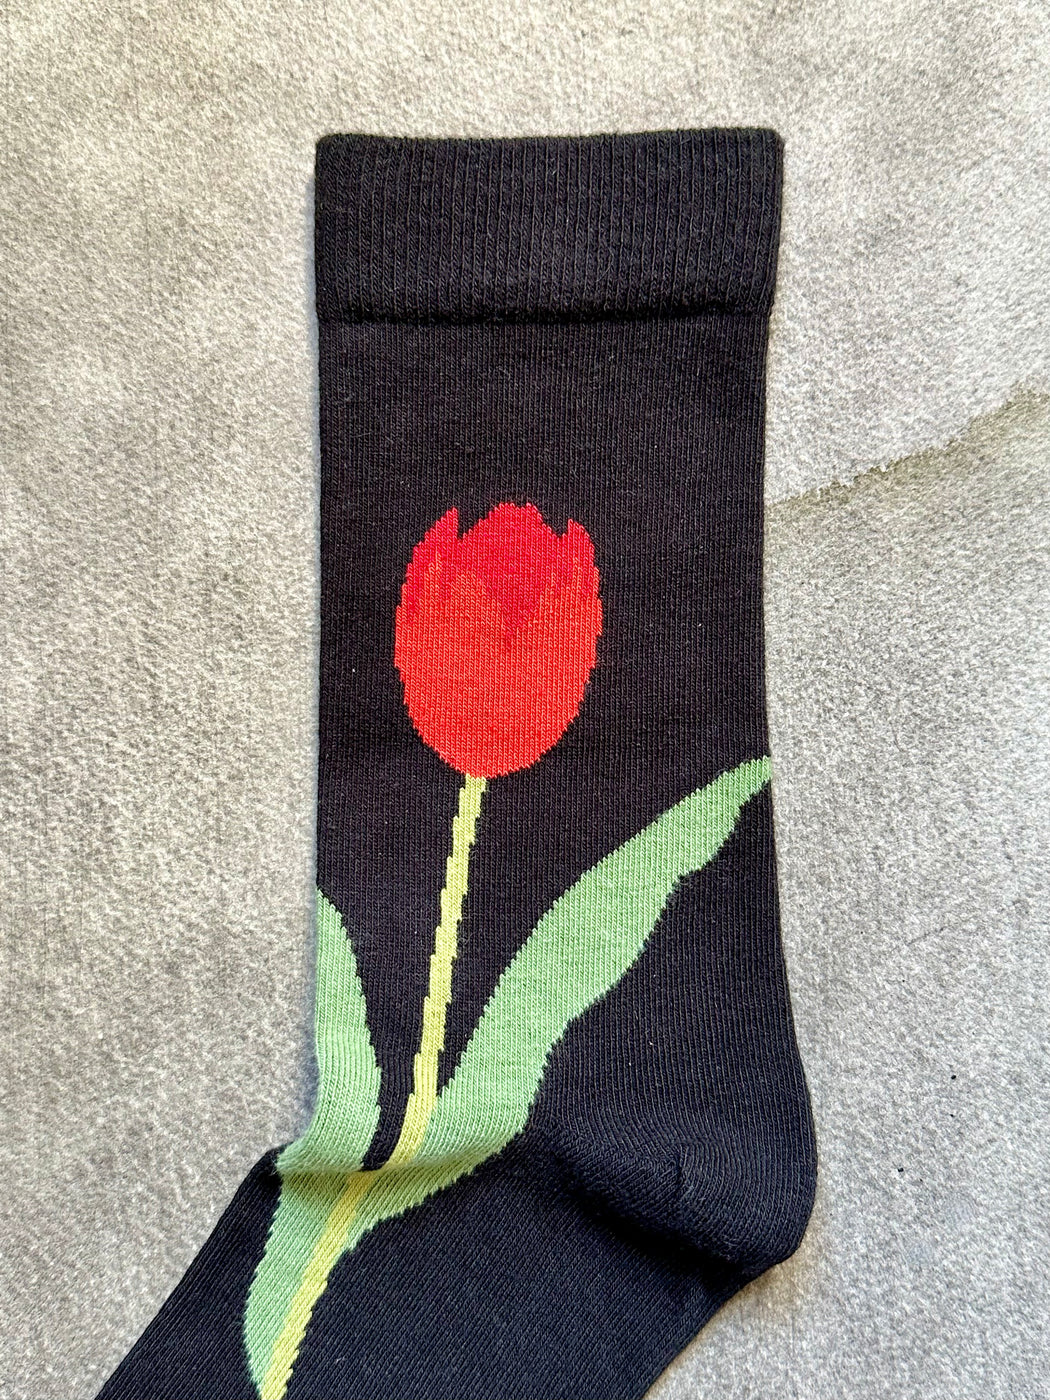 "Tulip" Socks by This Night